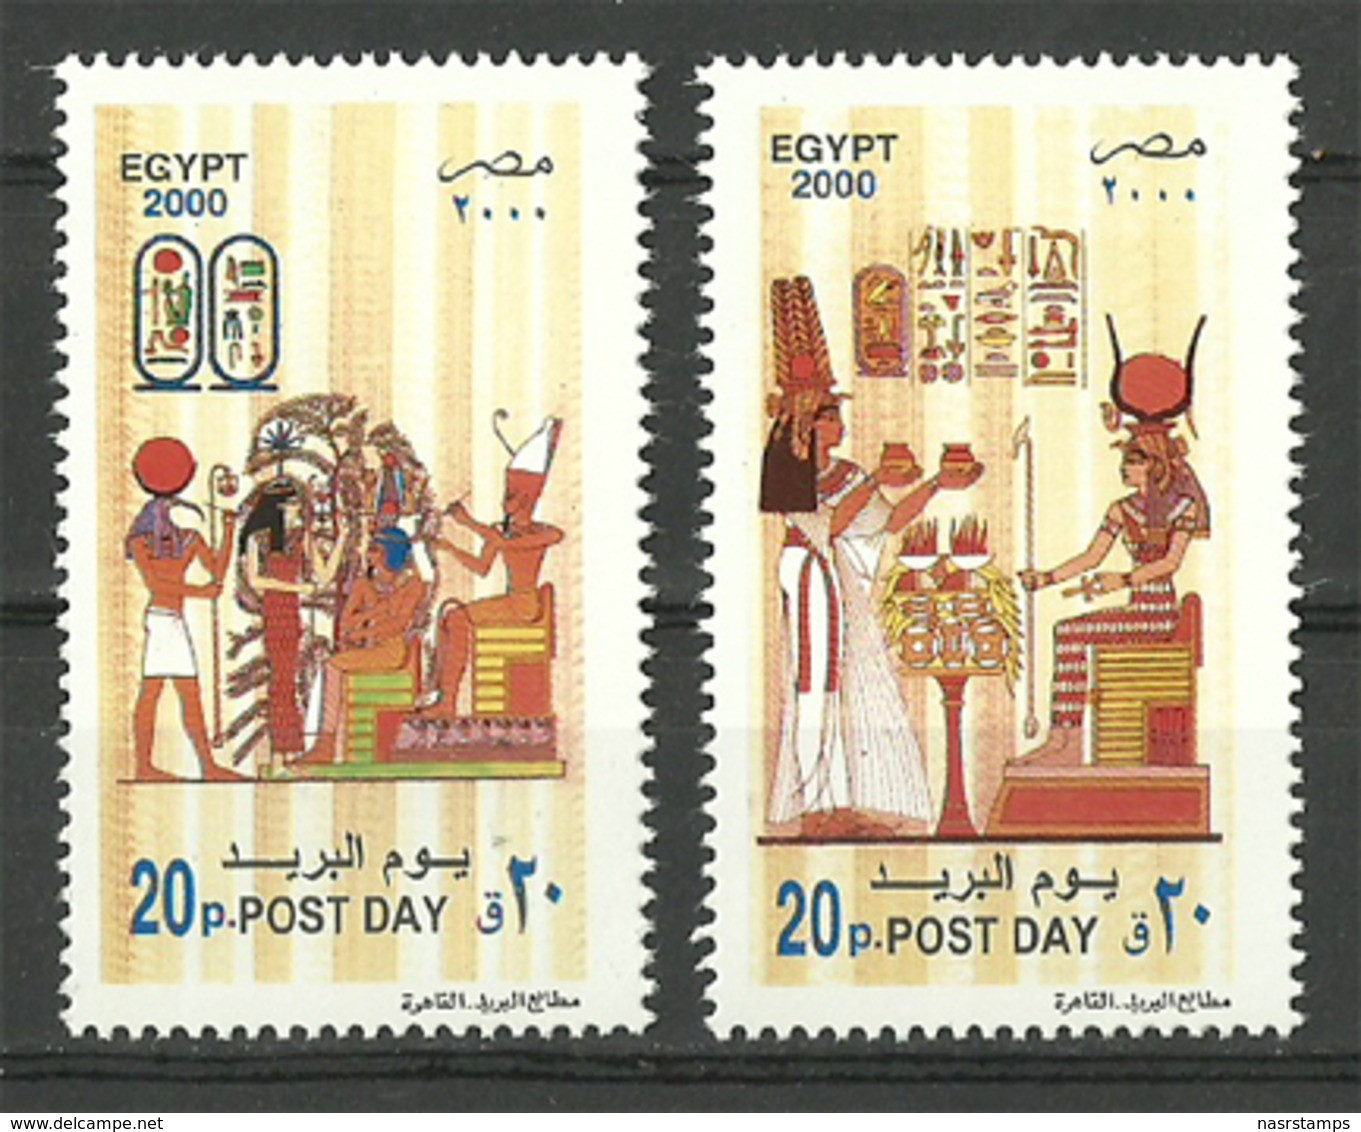 Egypt - 2000 - ( Post Day - Pharaonic ) - Set Of 2 - MNH (**) - Egyptology